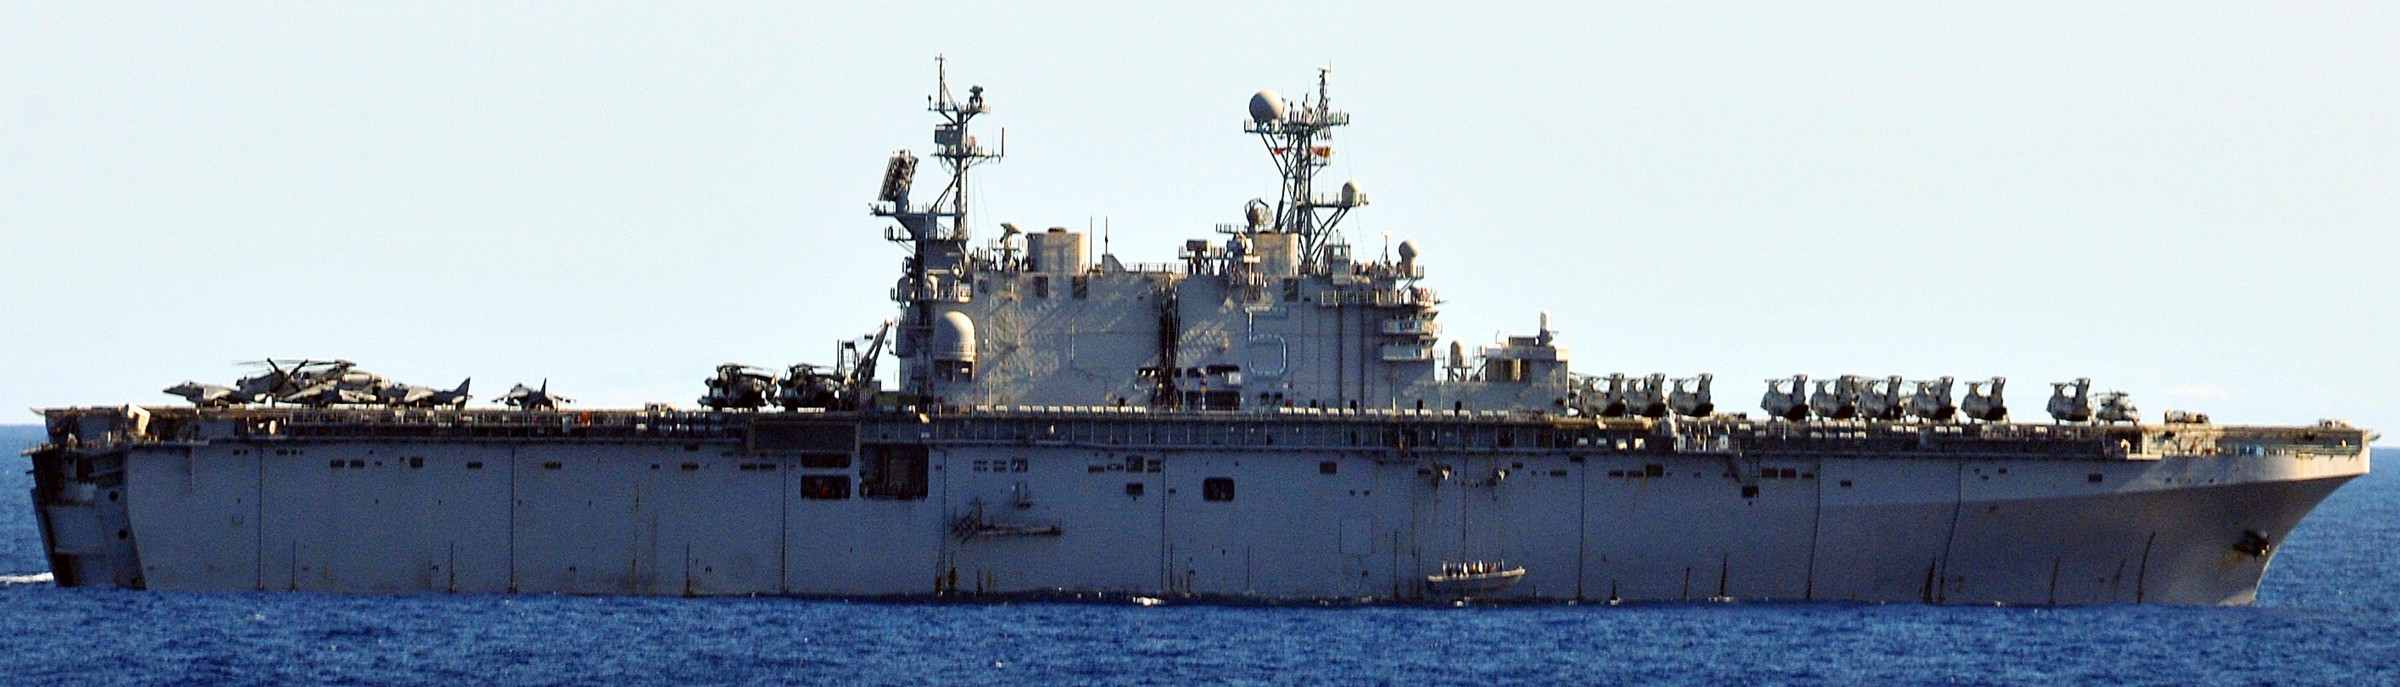 lha-5 uss peleliu tarawa class amphibious assault ship landing helicopter us navy hmm-165(rein) marines 61